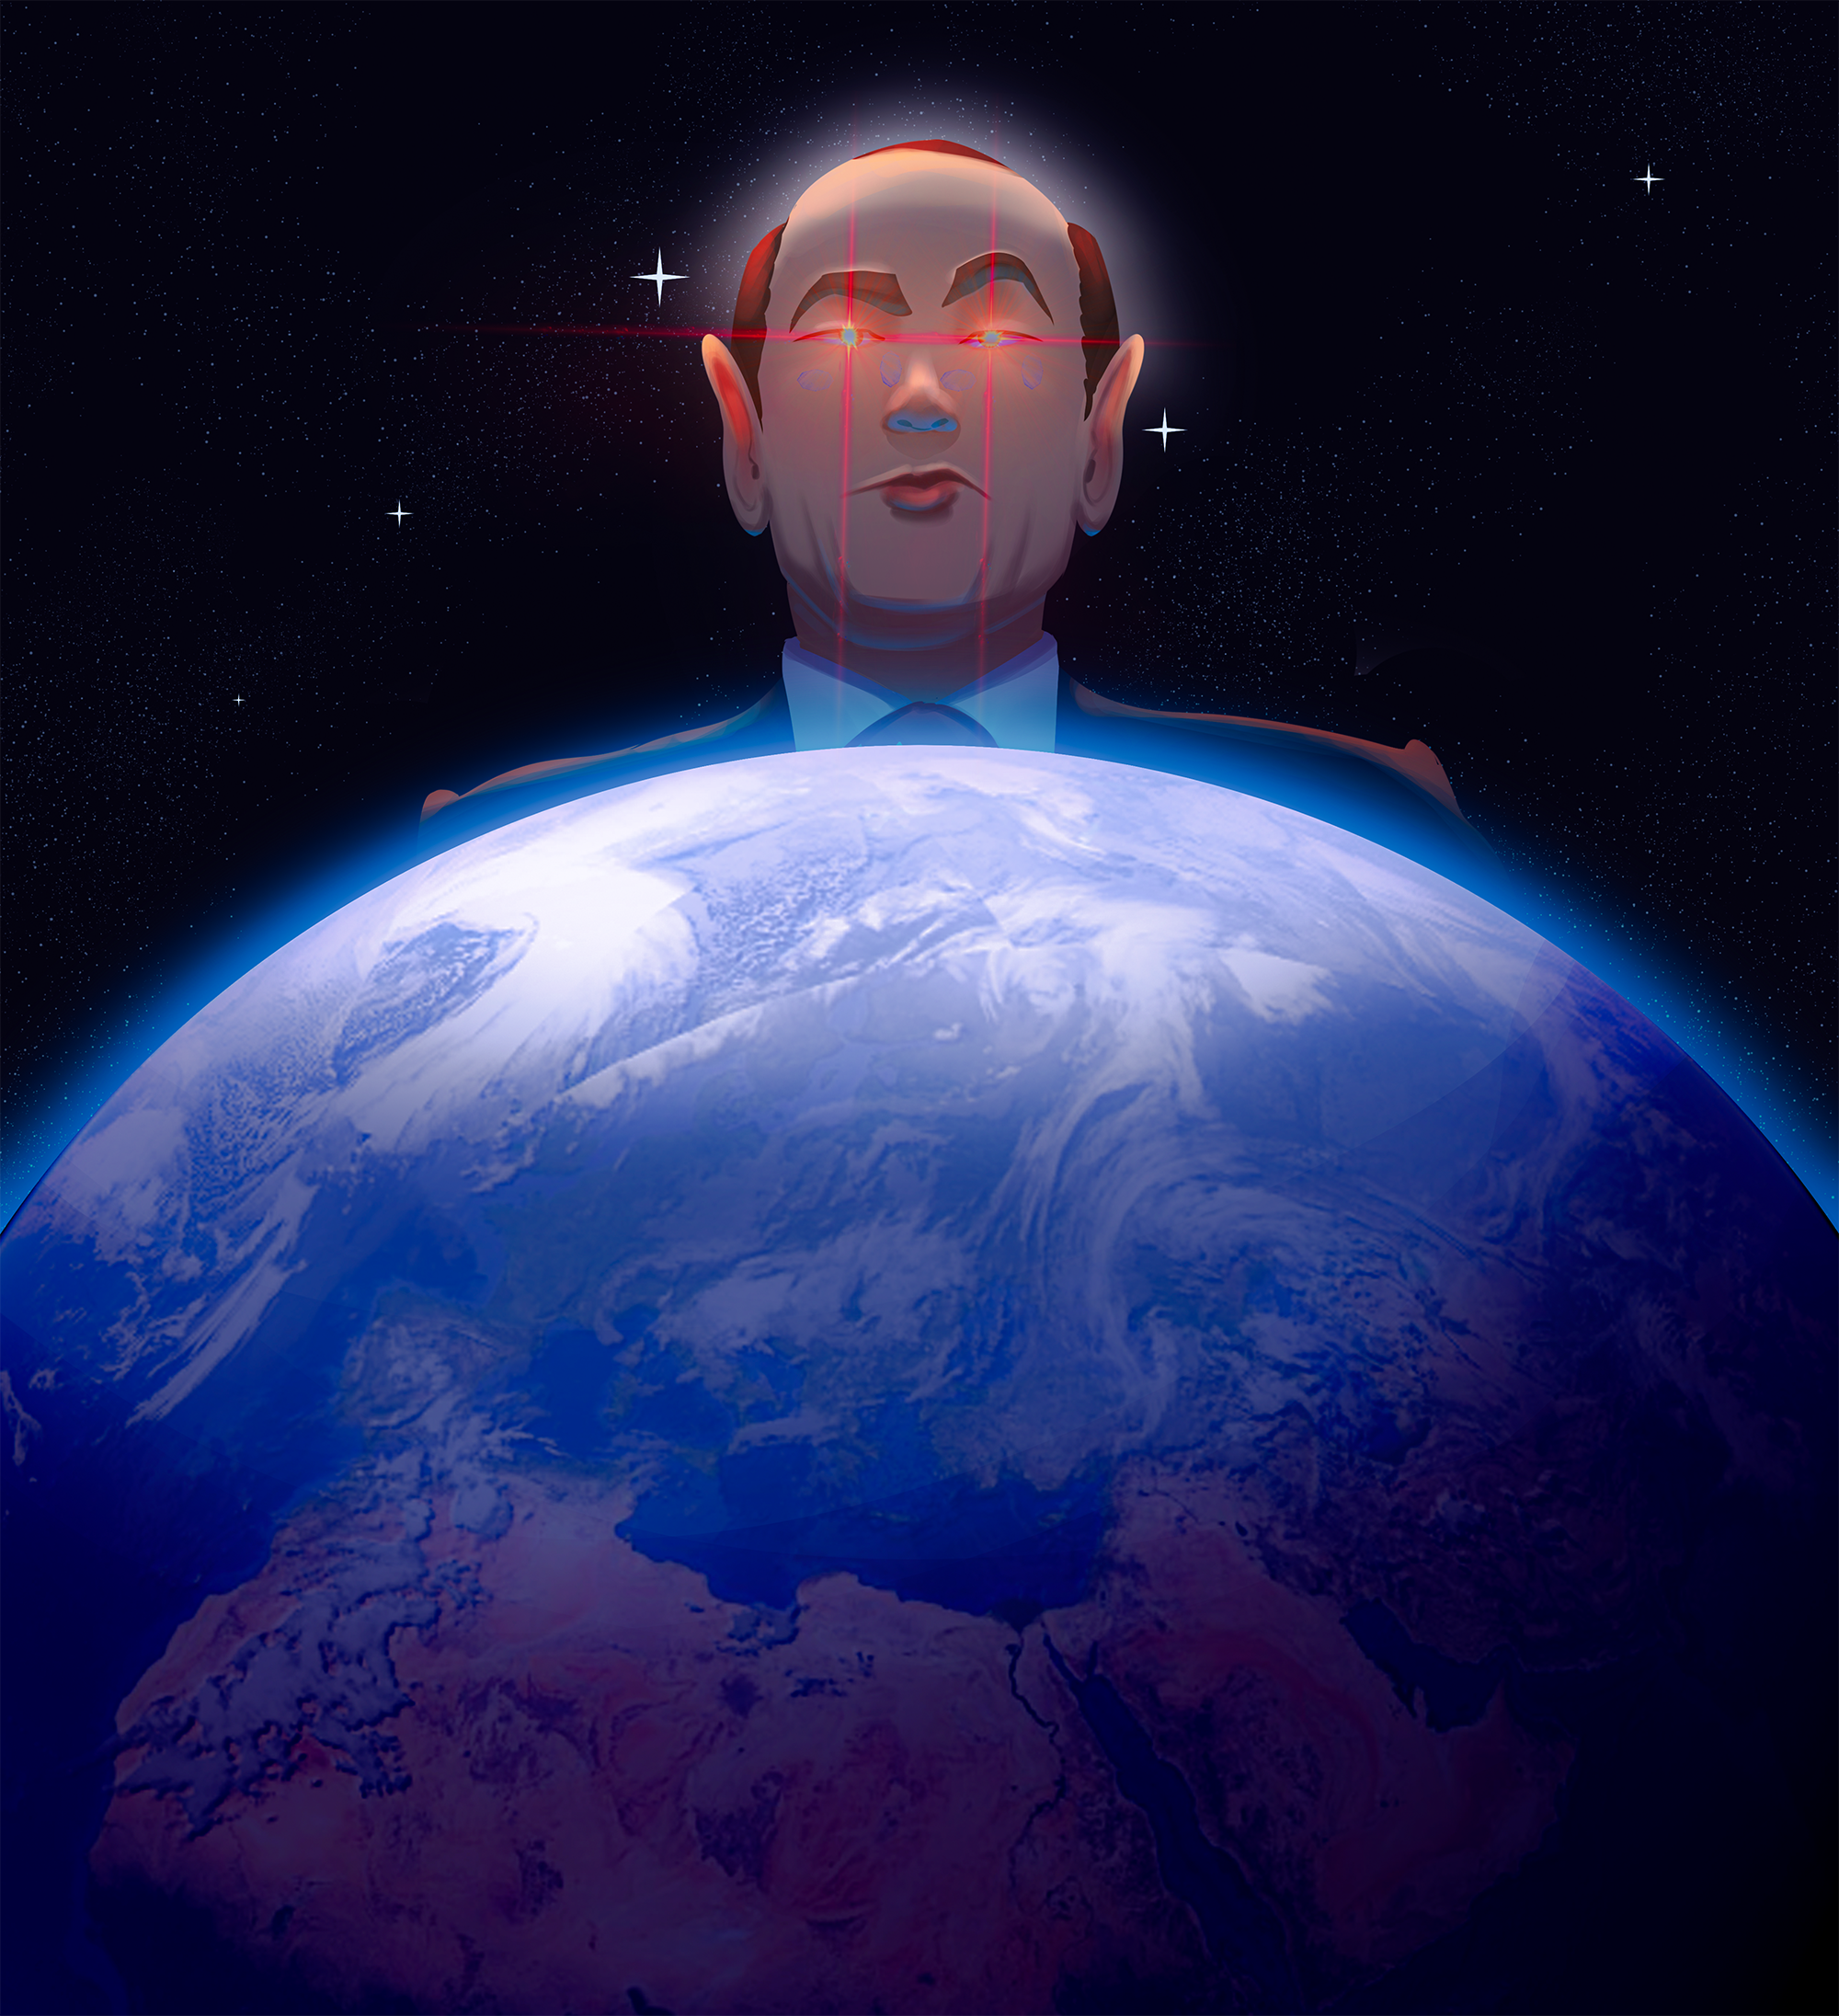 General 2000x2192 Earth glowing eyes Vladimir Putin stars portrait display star eyes space planet men digital art bald